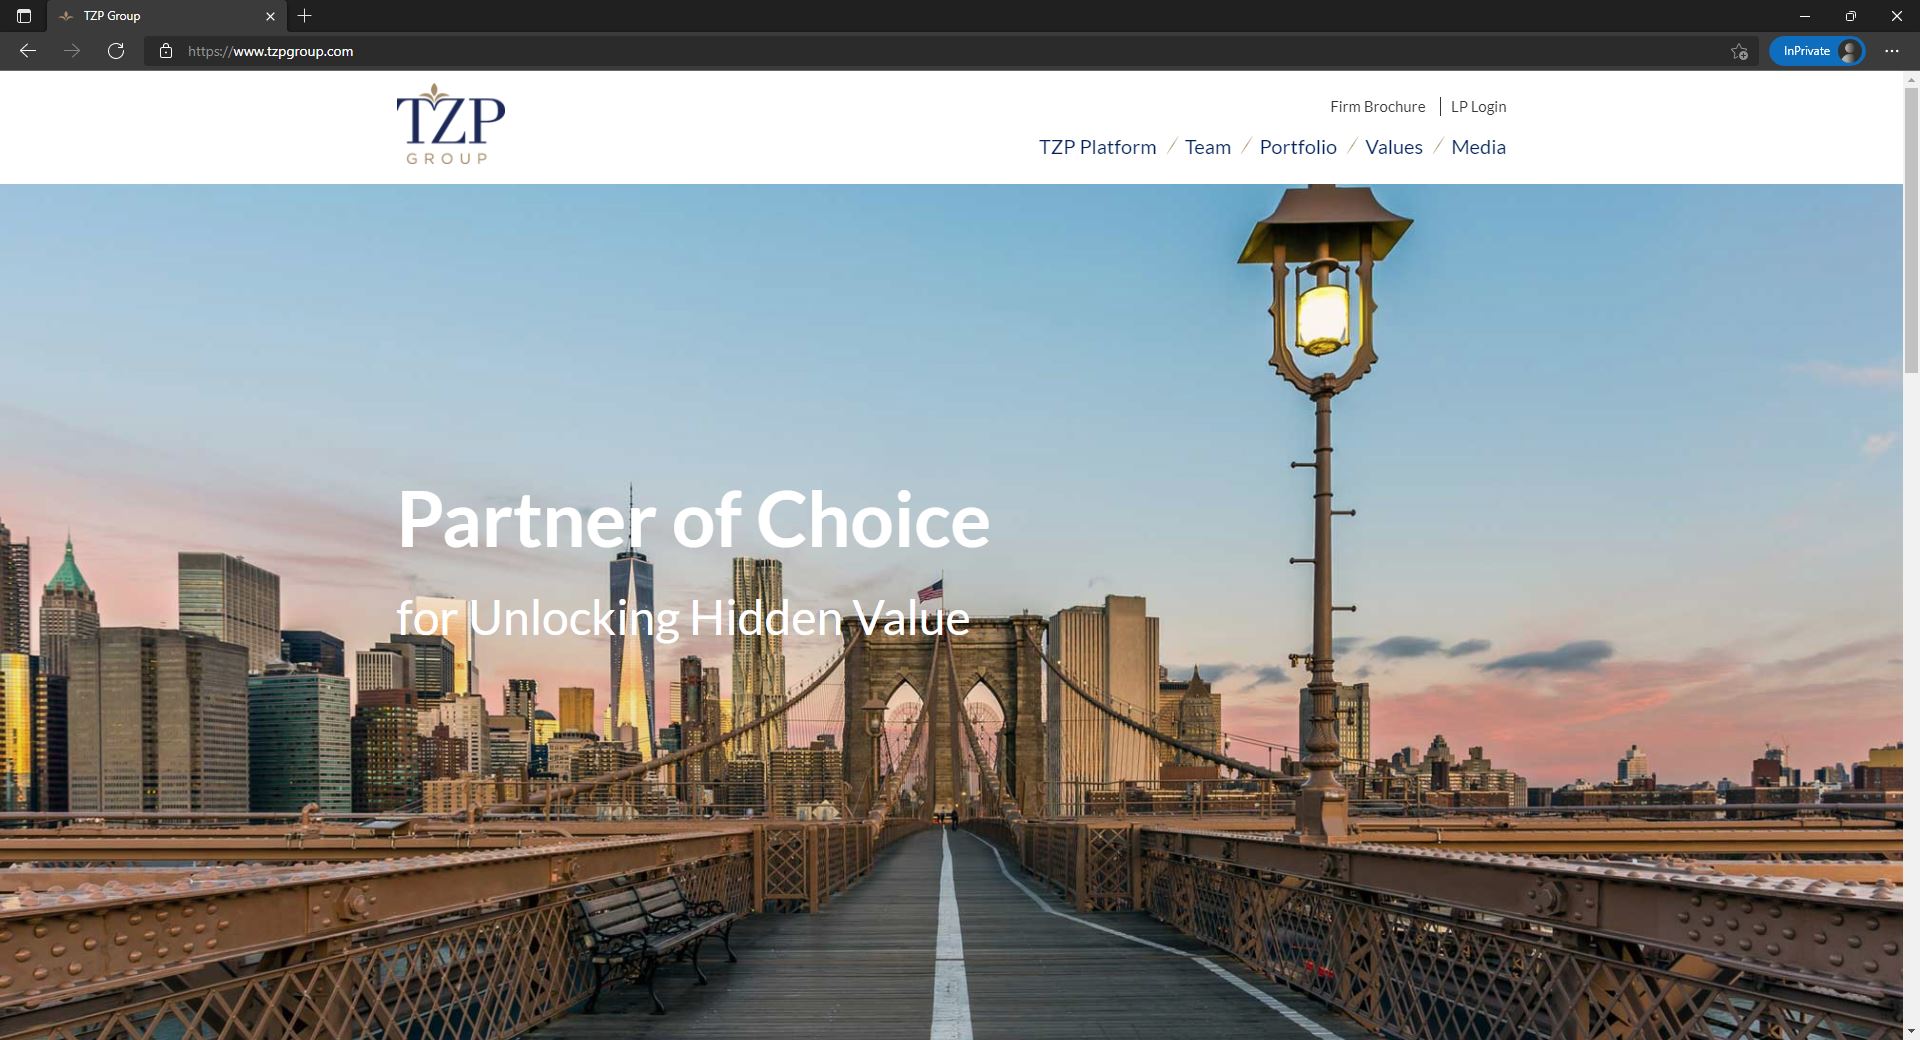 TZP Group website homepage